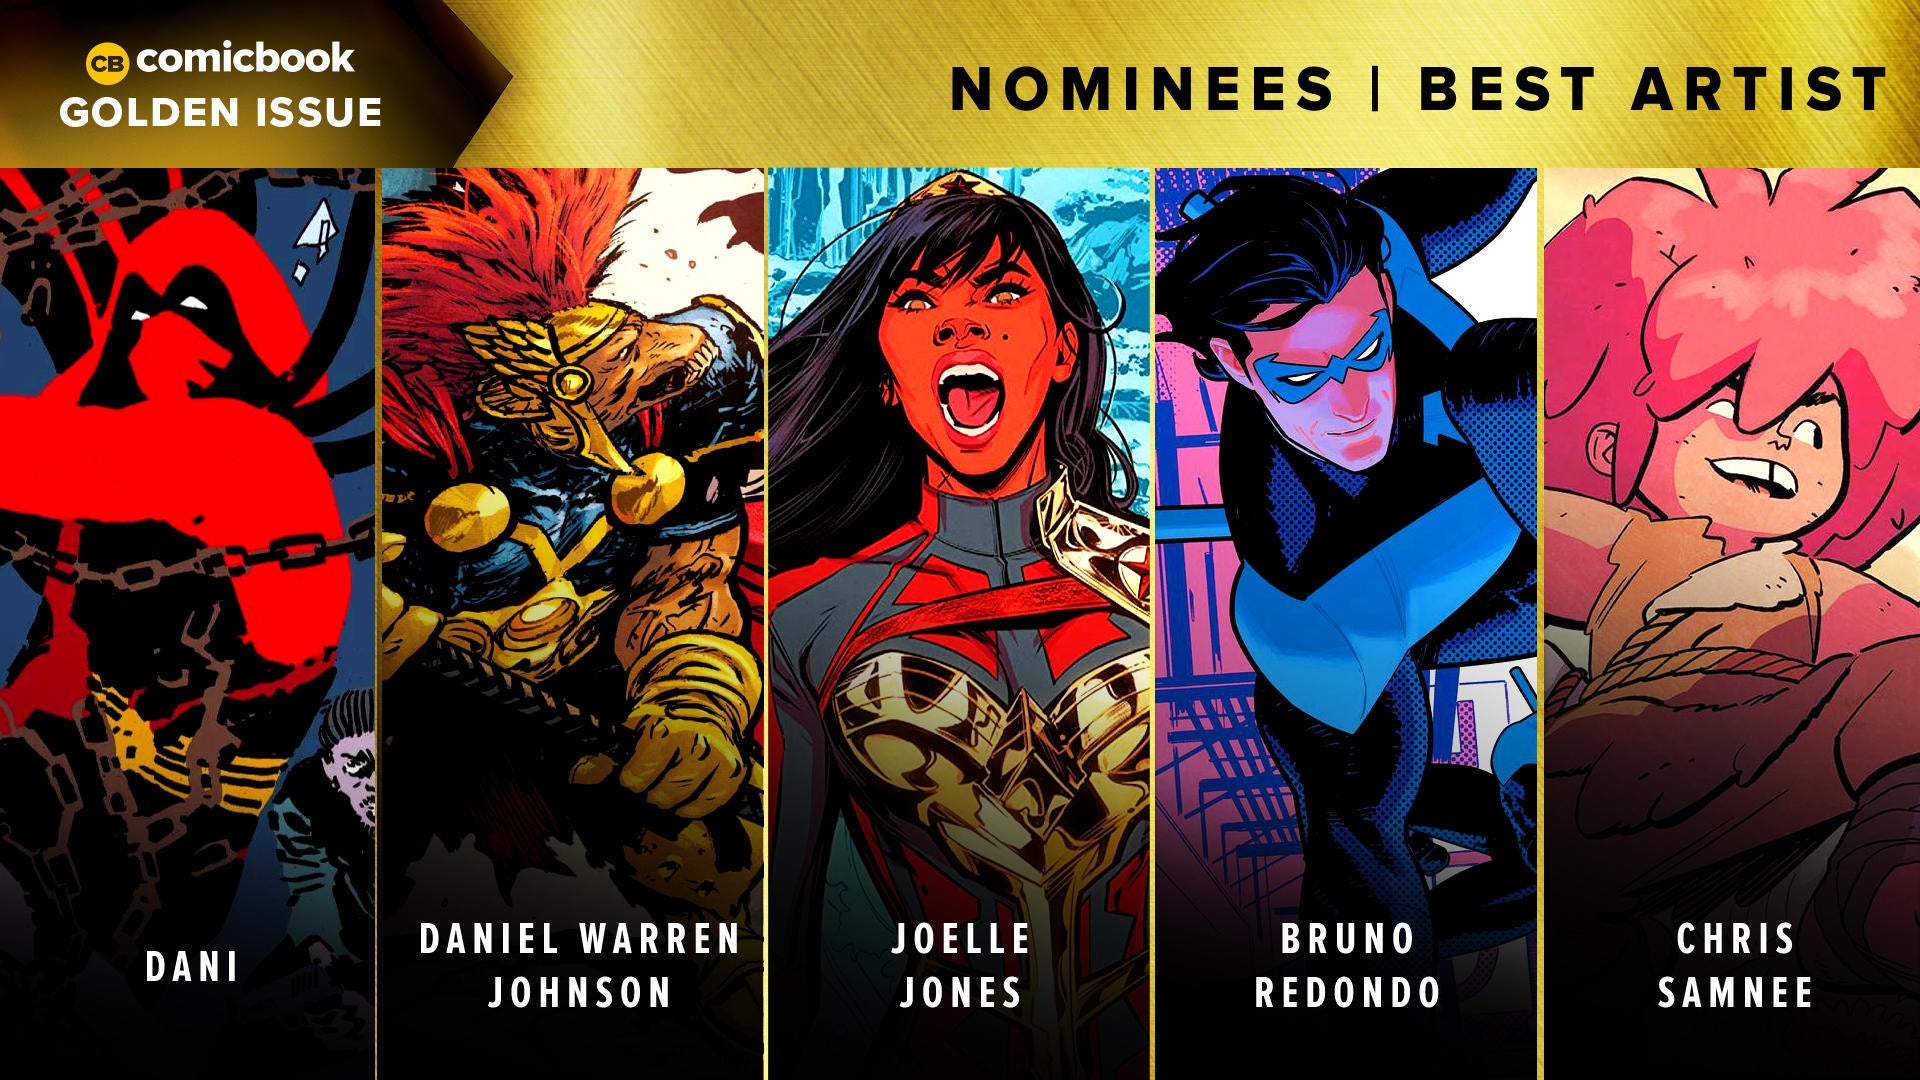 golden-issues-2021-nominees-best-artist.jpg